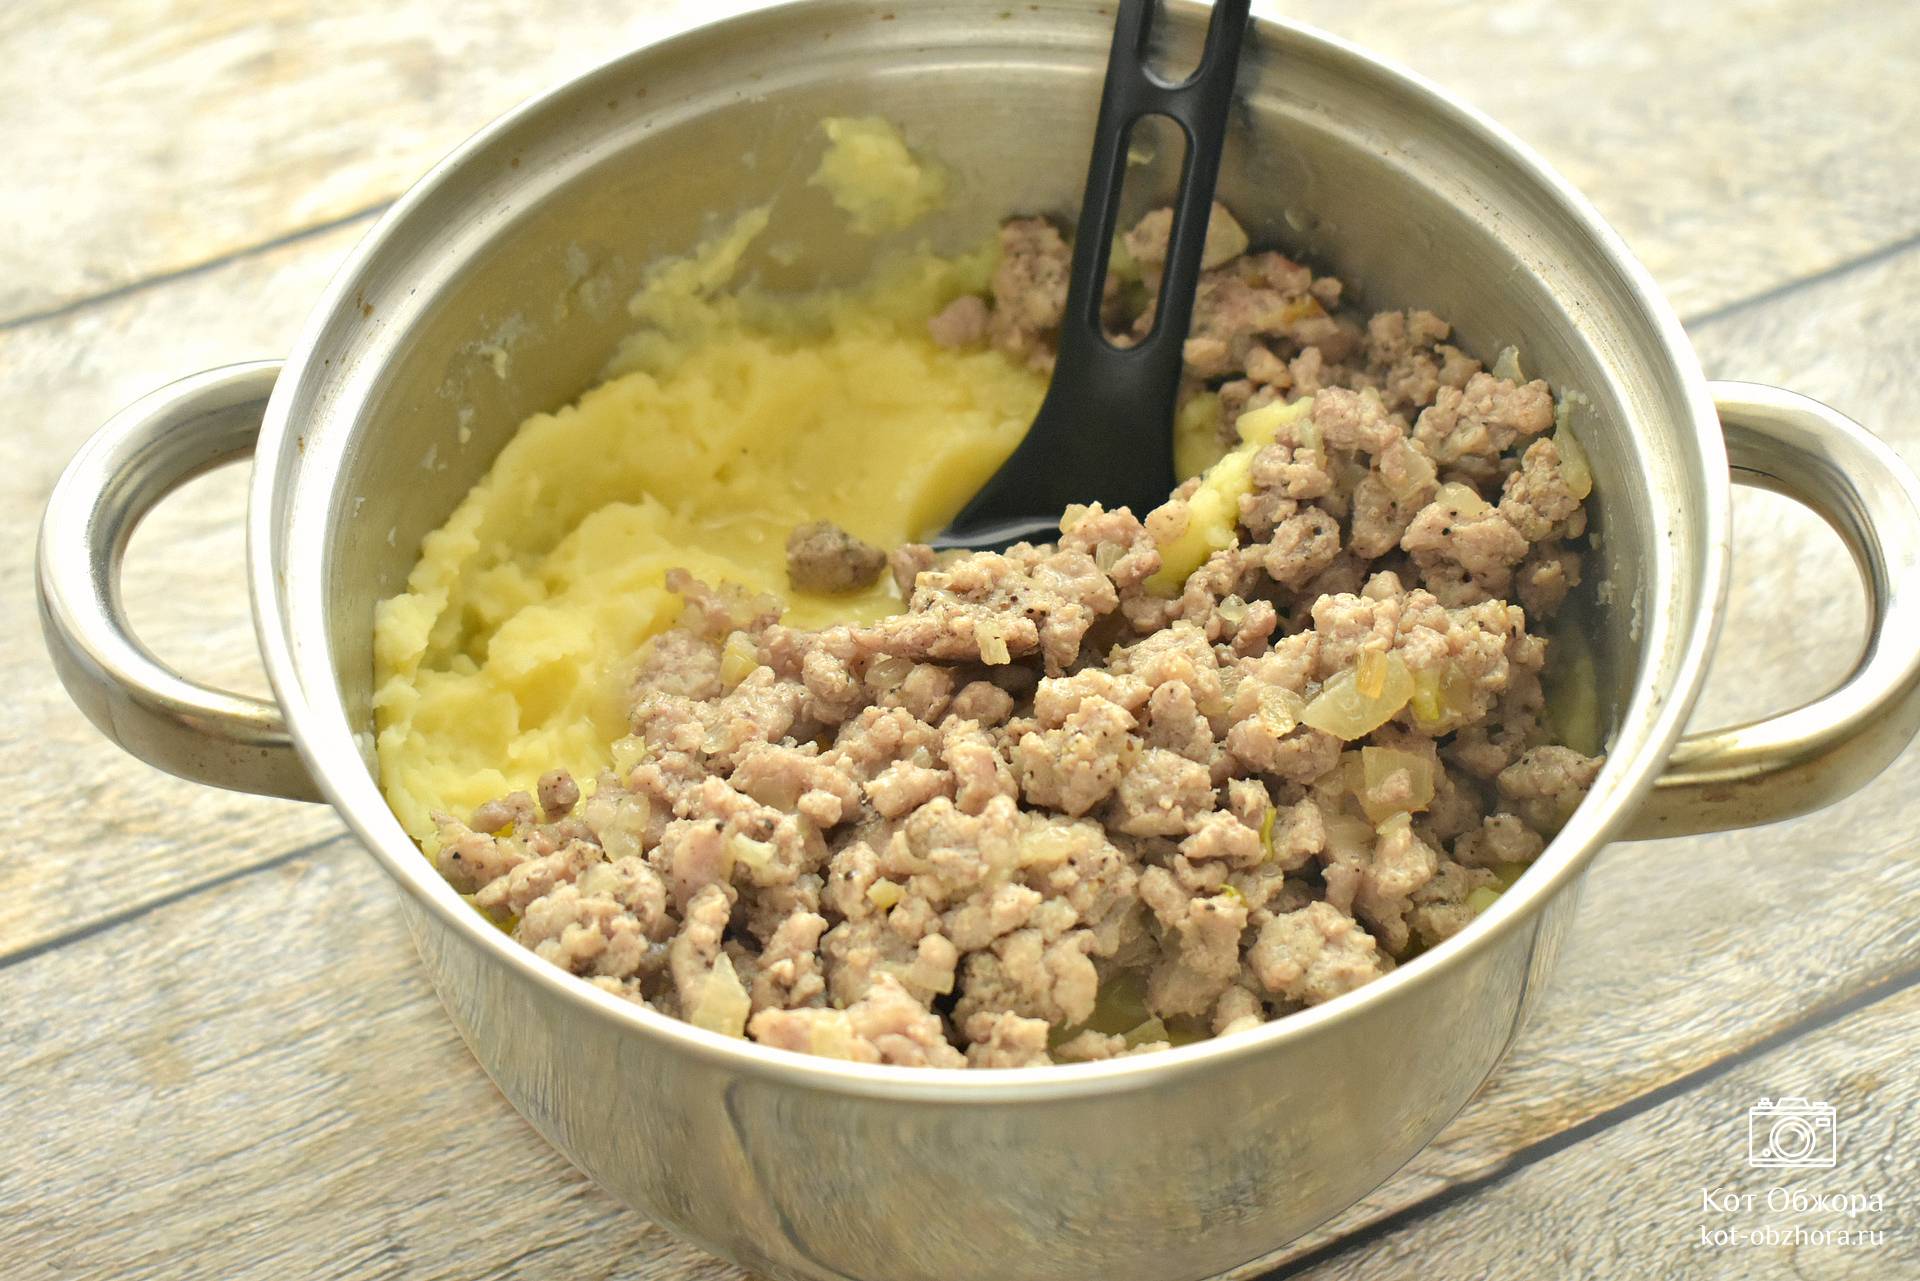 Жареная картошка с фаршем на сковороде рецепт с фото пошагово - бородино-молодежка.рф